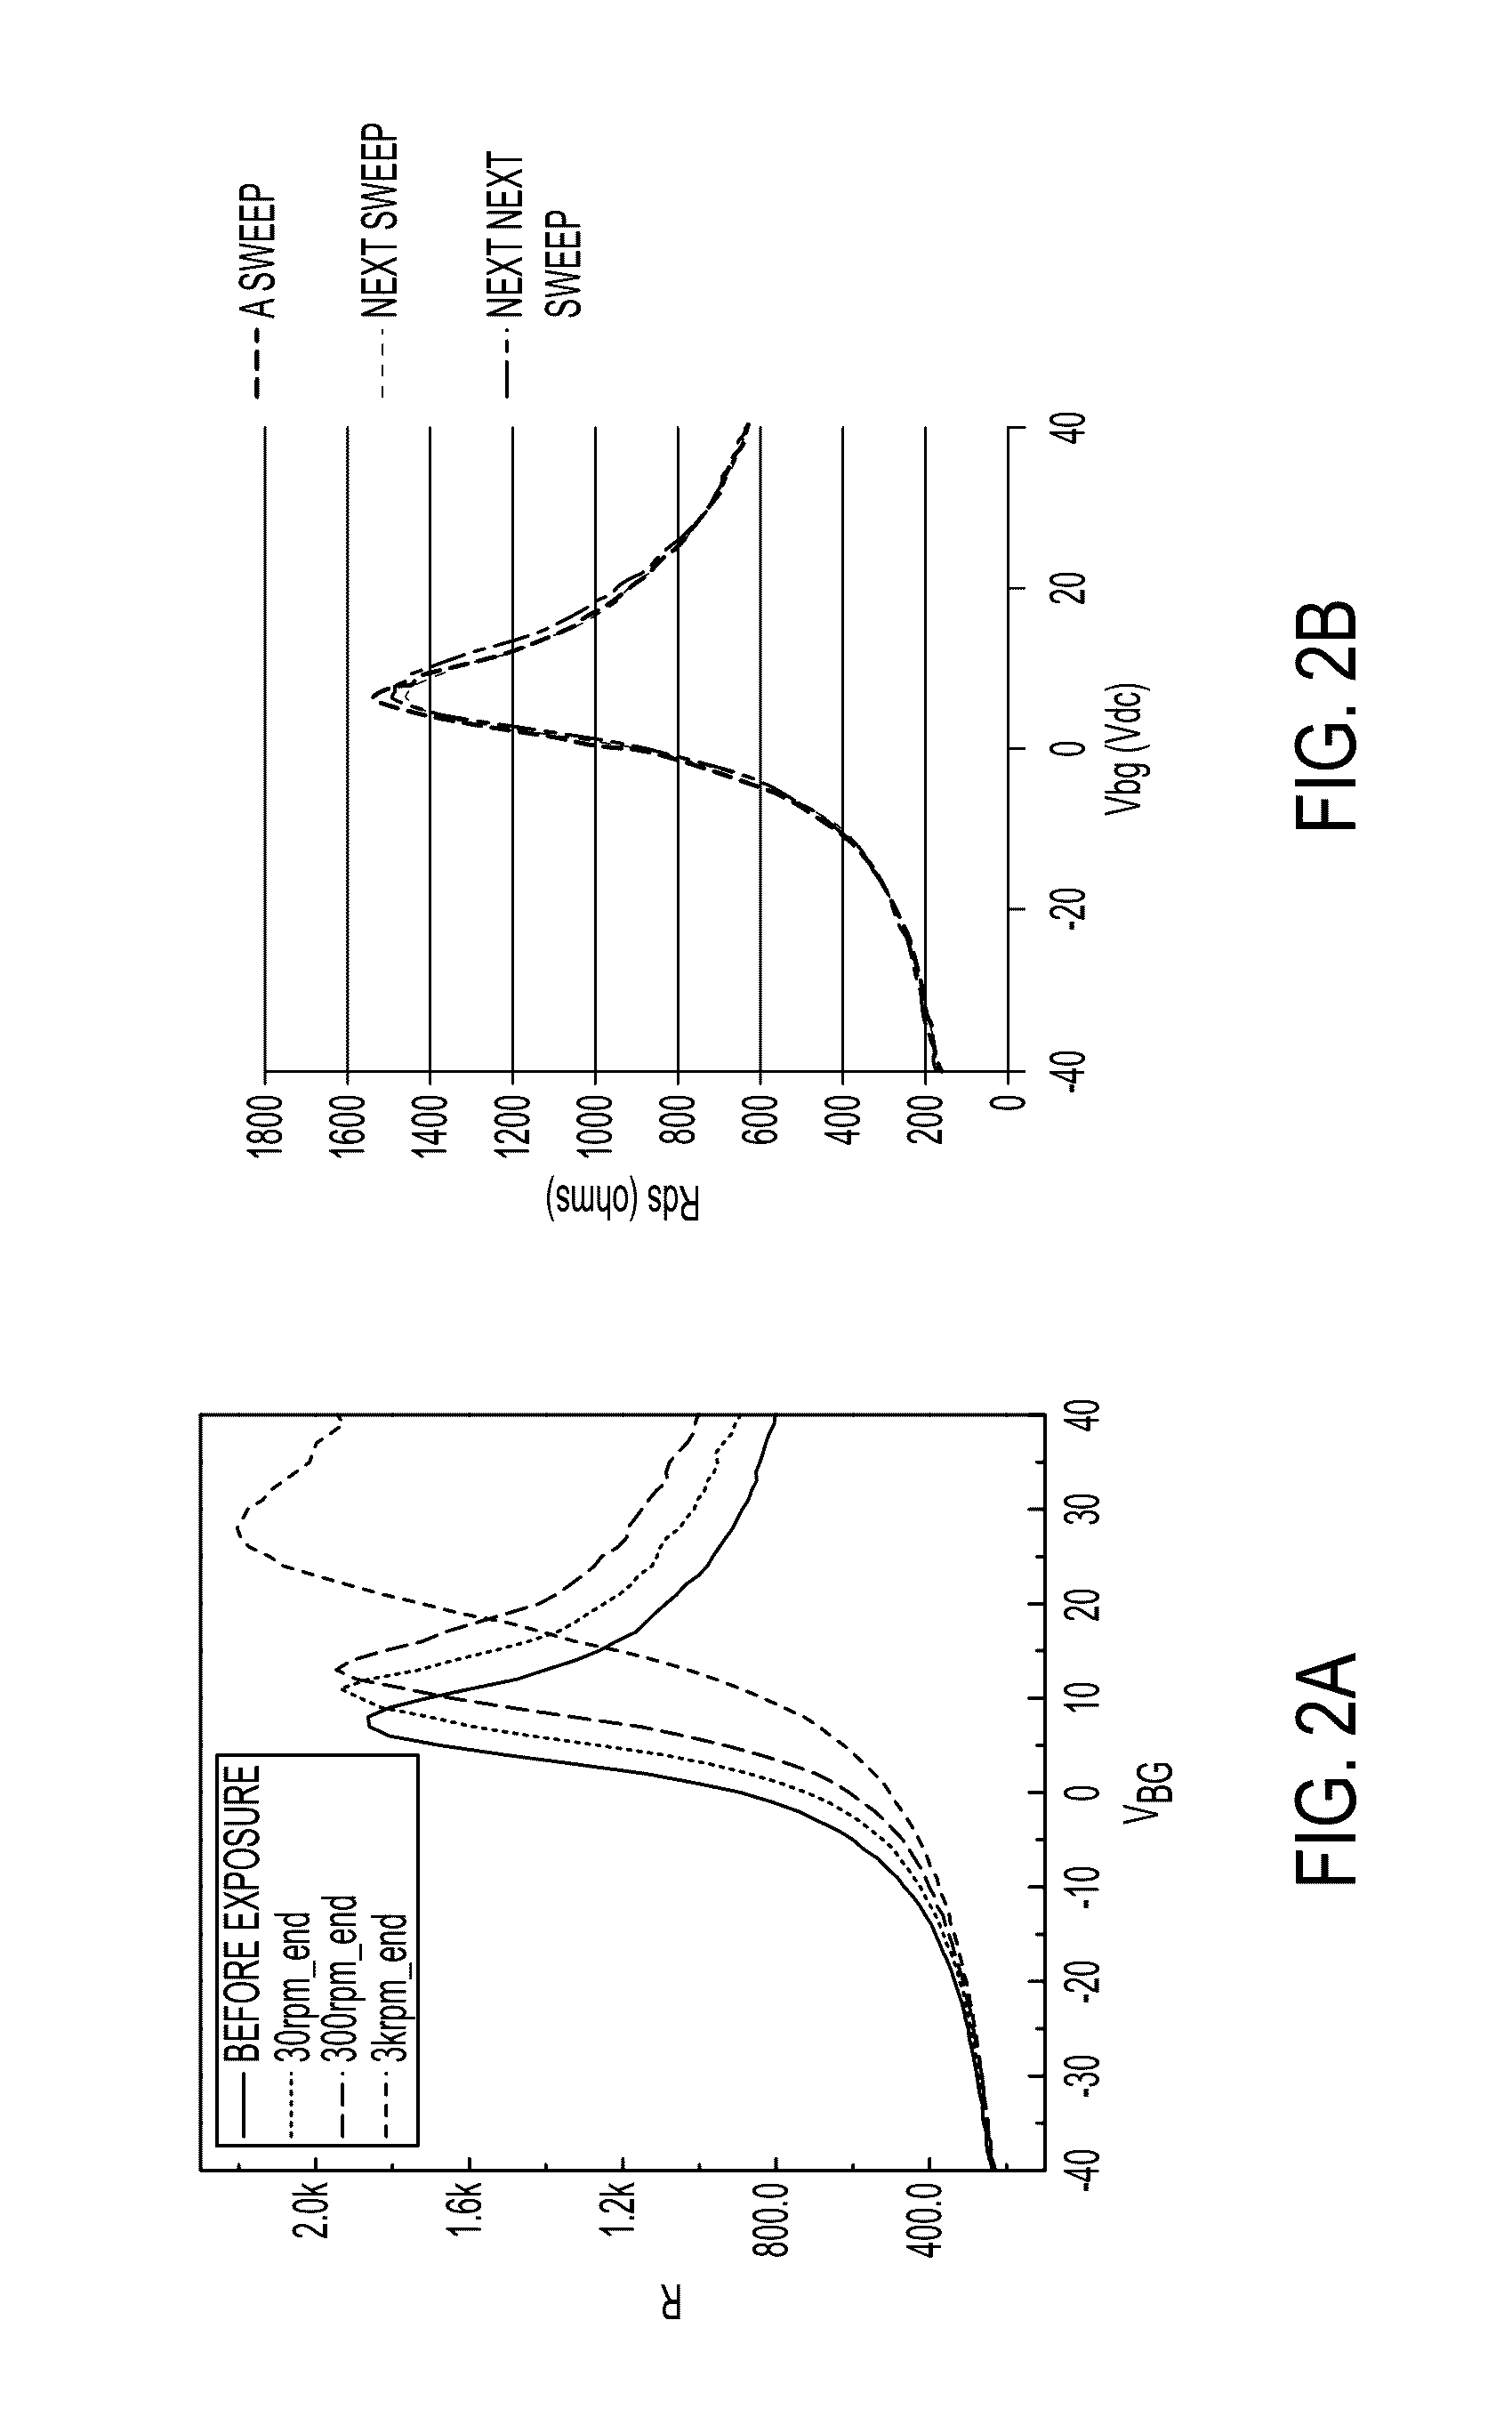 Graphene field effect transistor for radiation detection